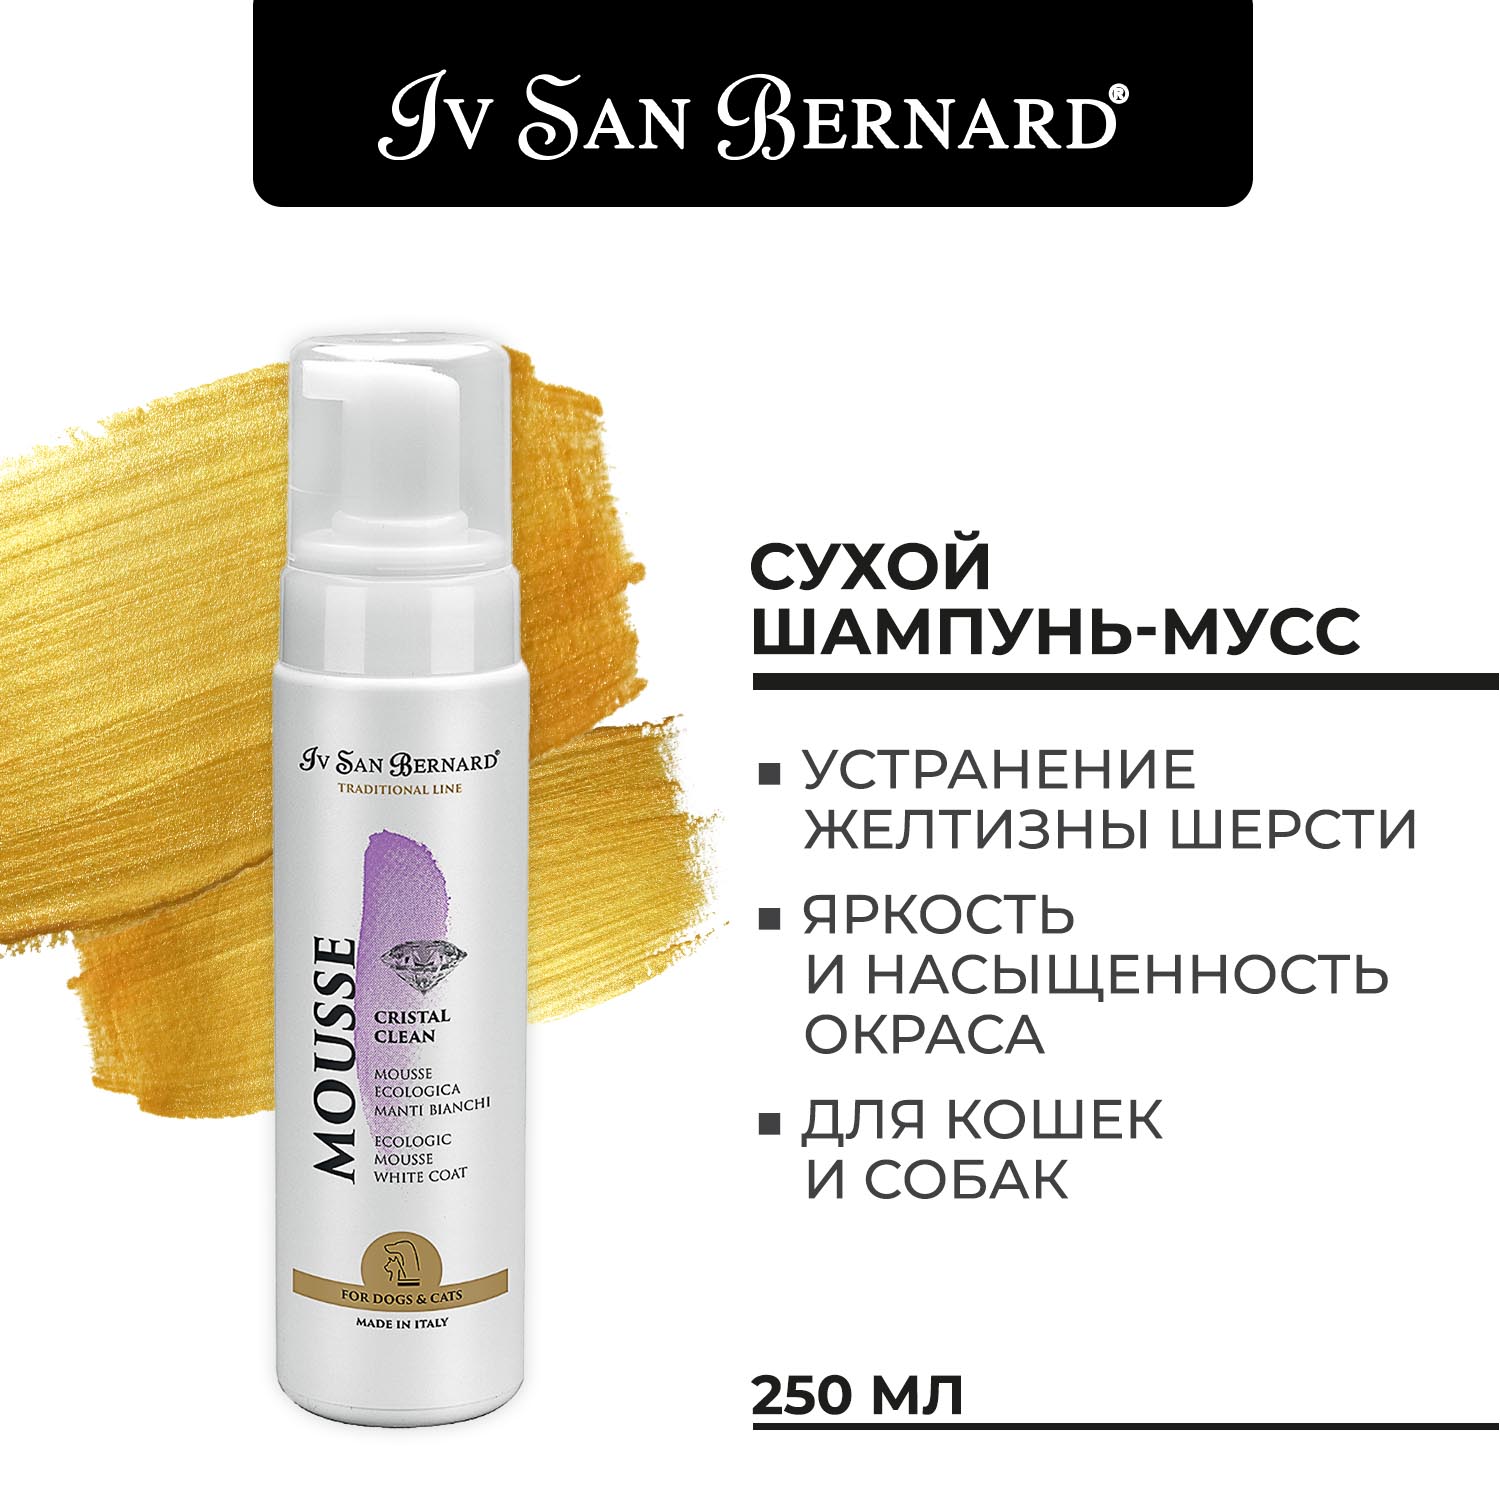 ISB Traditional Line Cristal Clean Мусс для устранения желтизны шерсти 250 мл СКИДКА 35%